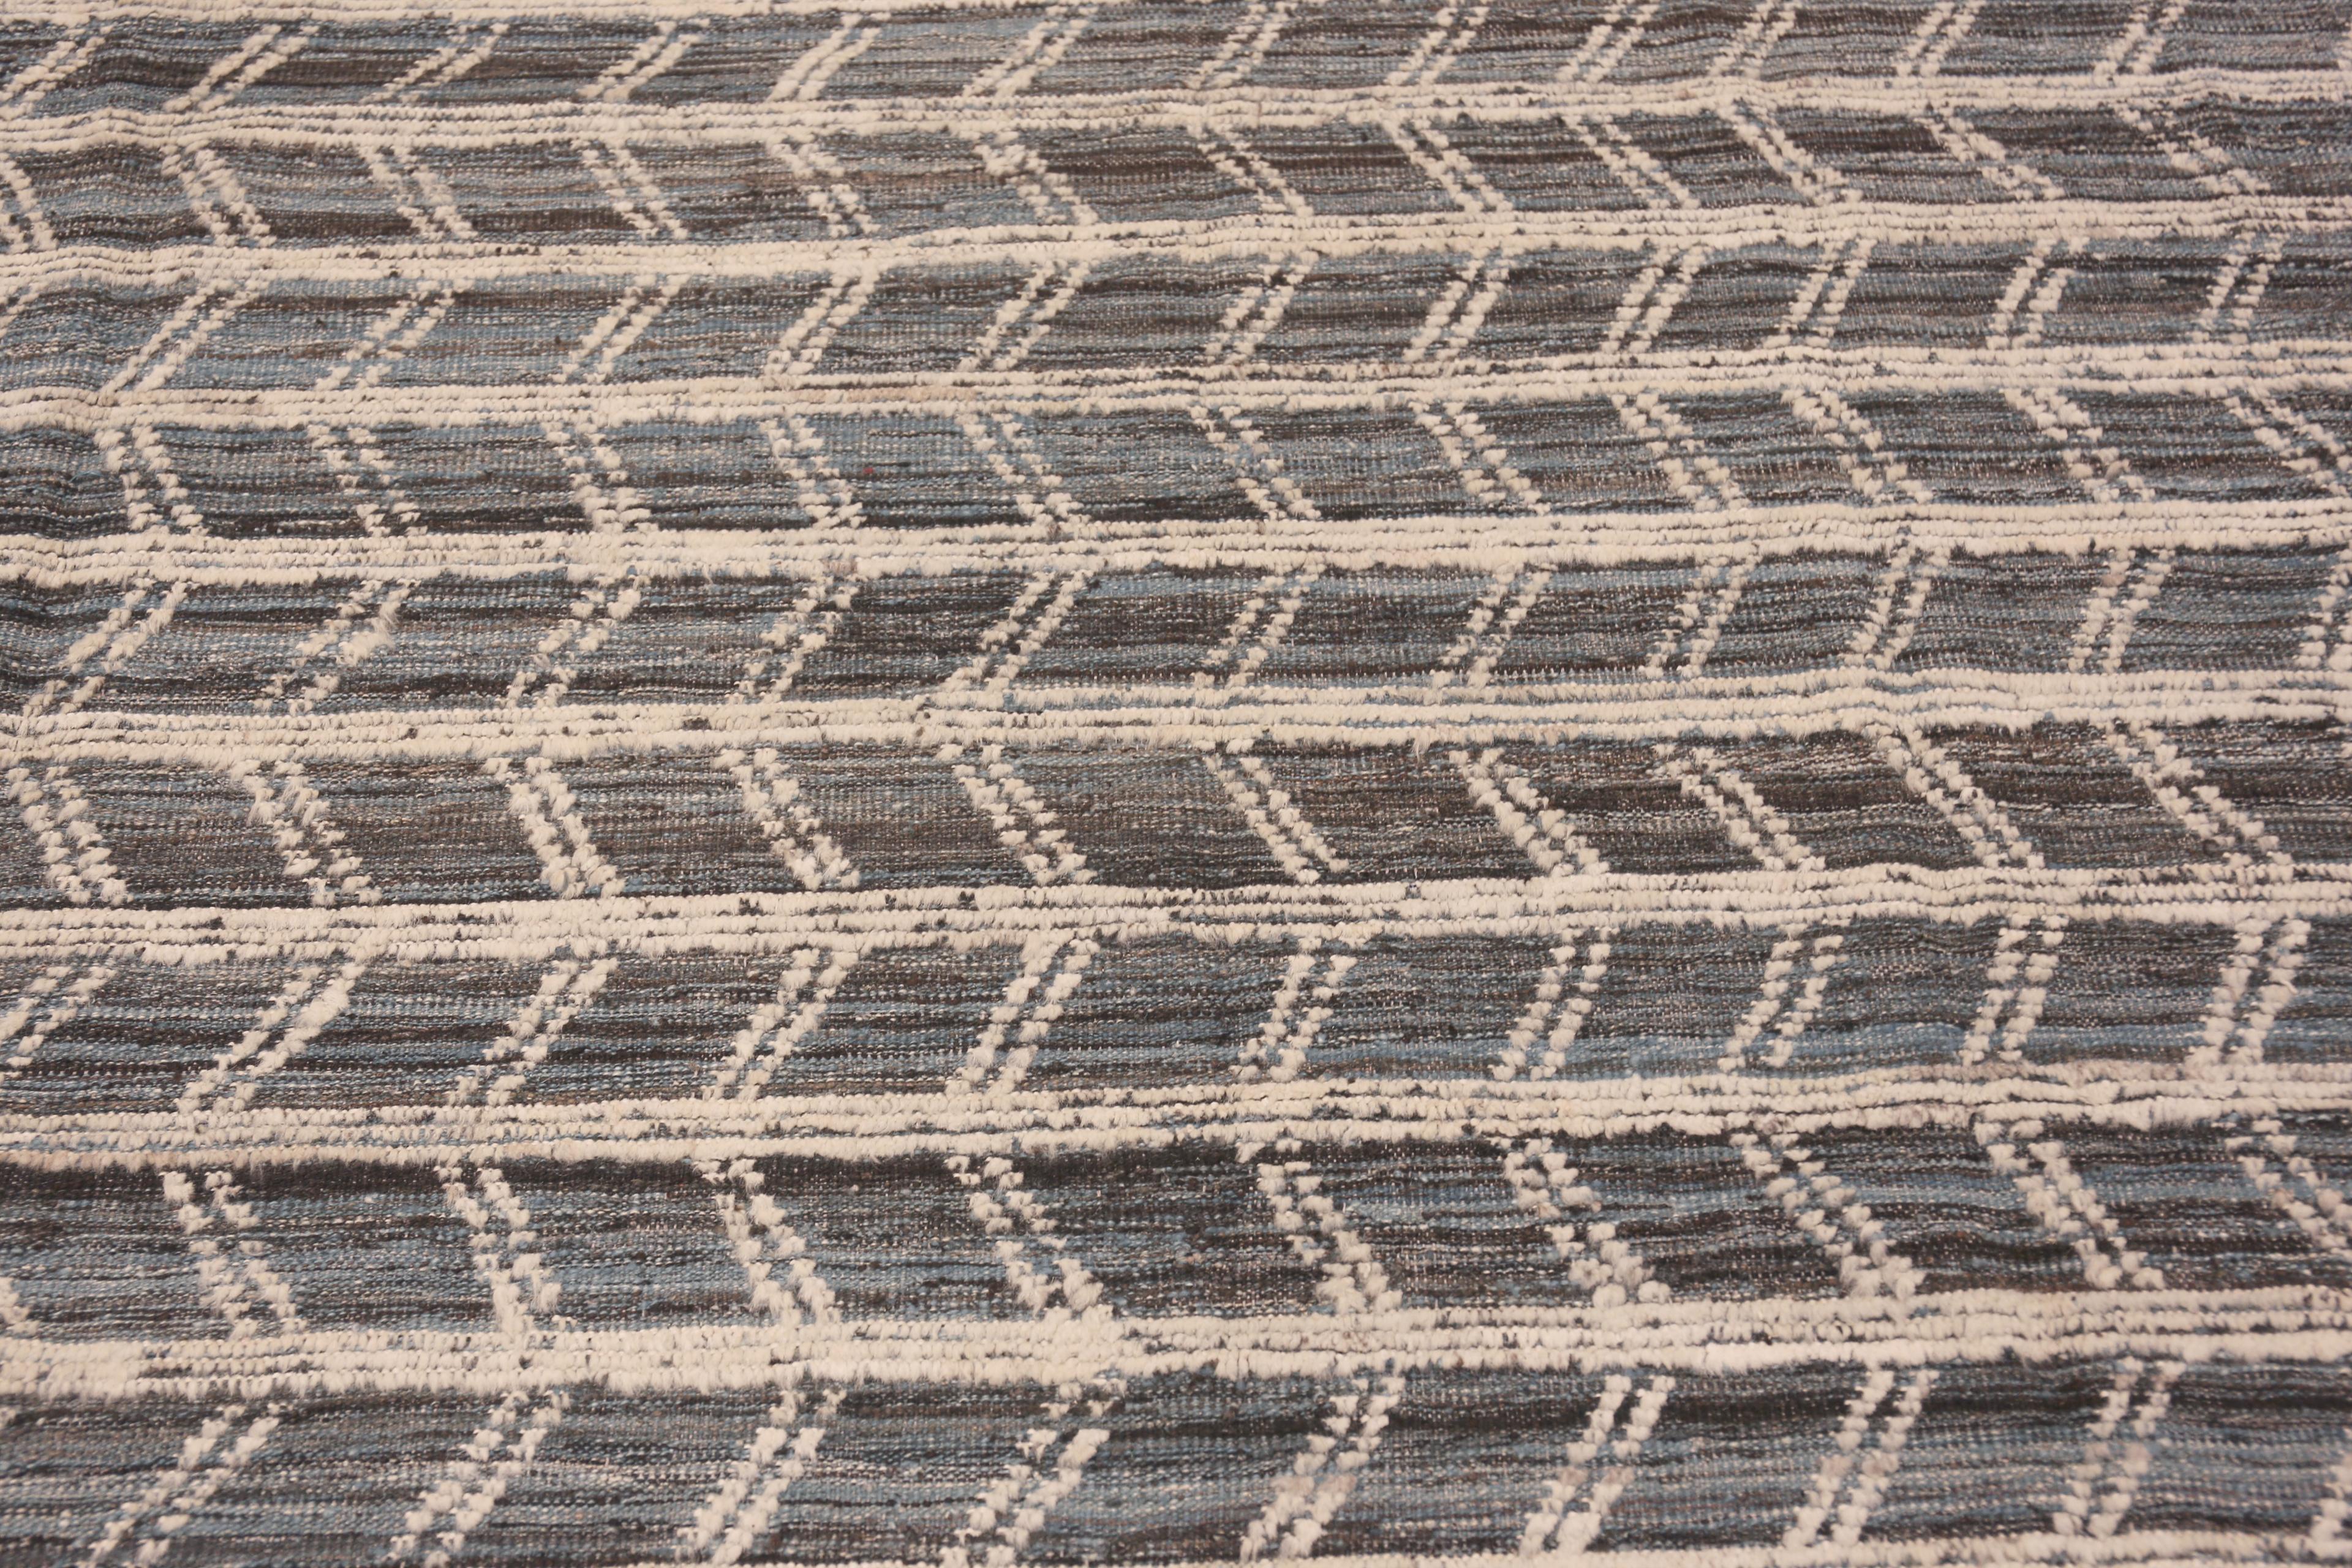 Wool Nazmiyal Collection Geometric Zigzag Motif Modern Area Rug 10' x 12'7